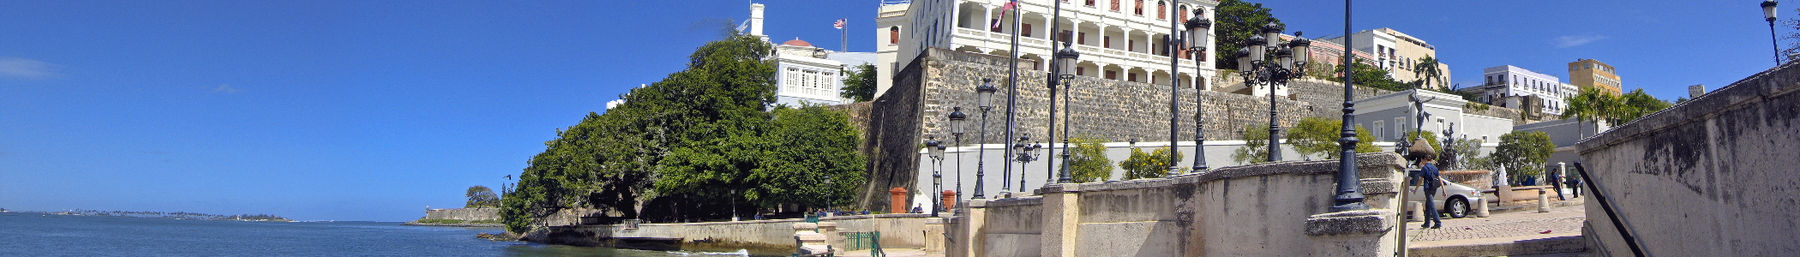 San Juan banner.jpg